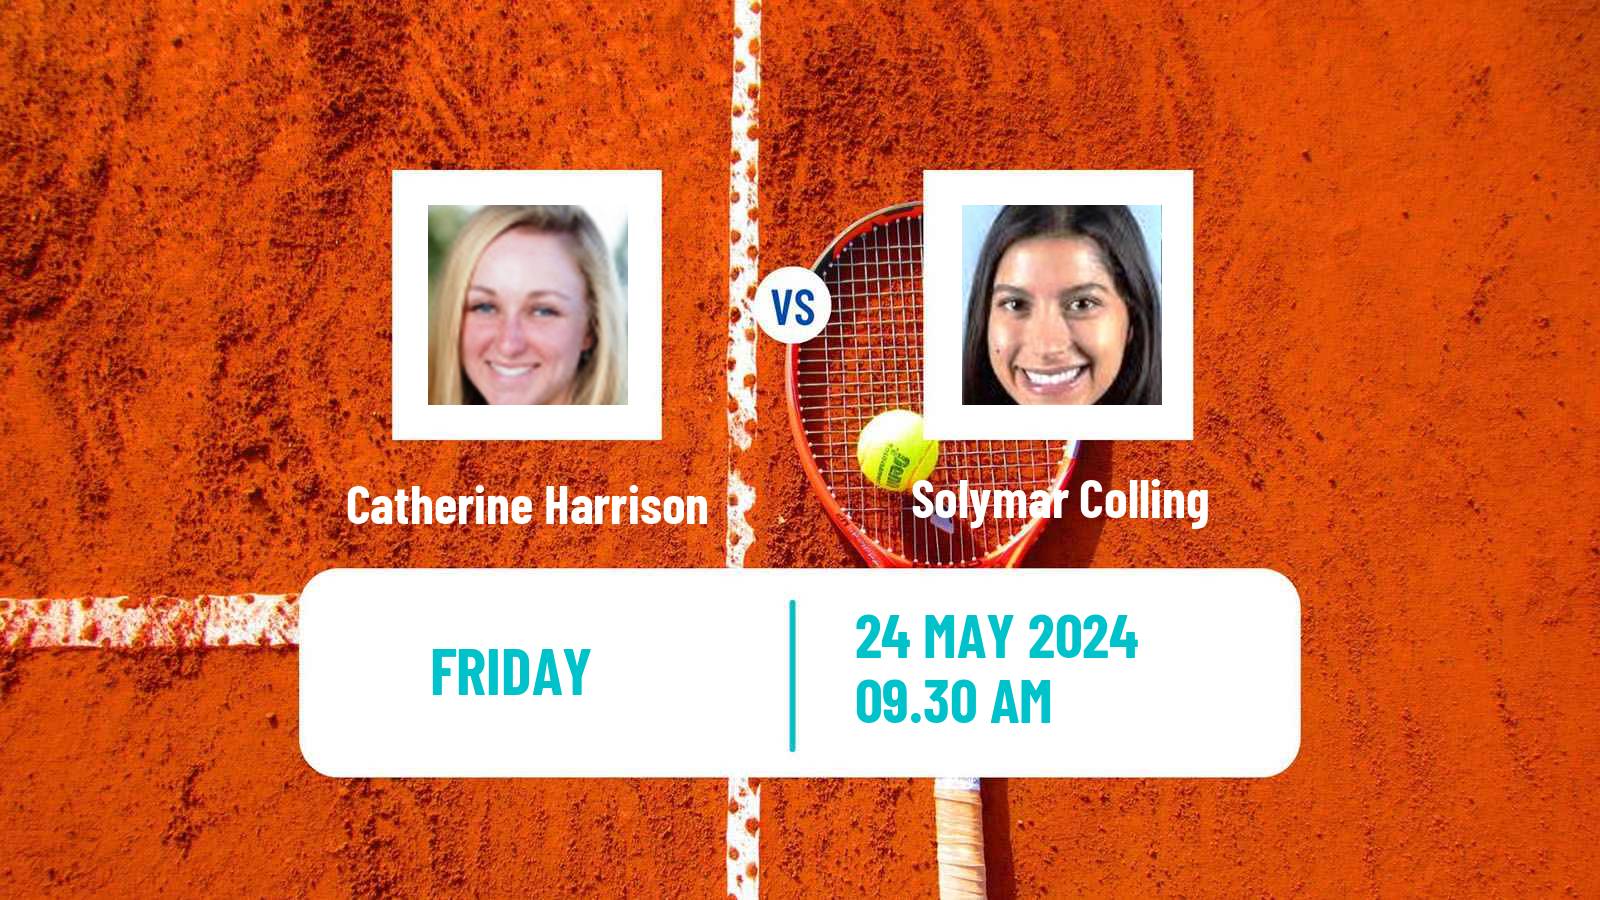 Tennis ITF W35 Santo Domingo 3 Women Catherine Harrison - Solymar Colling